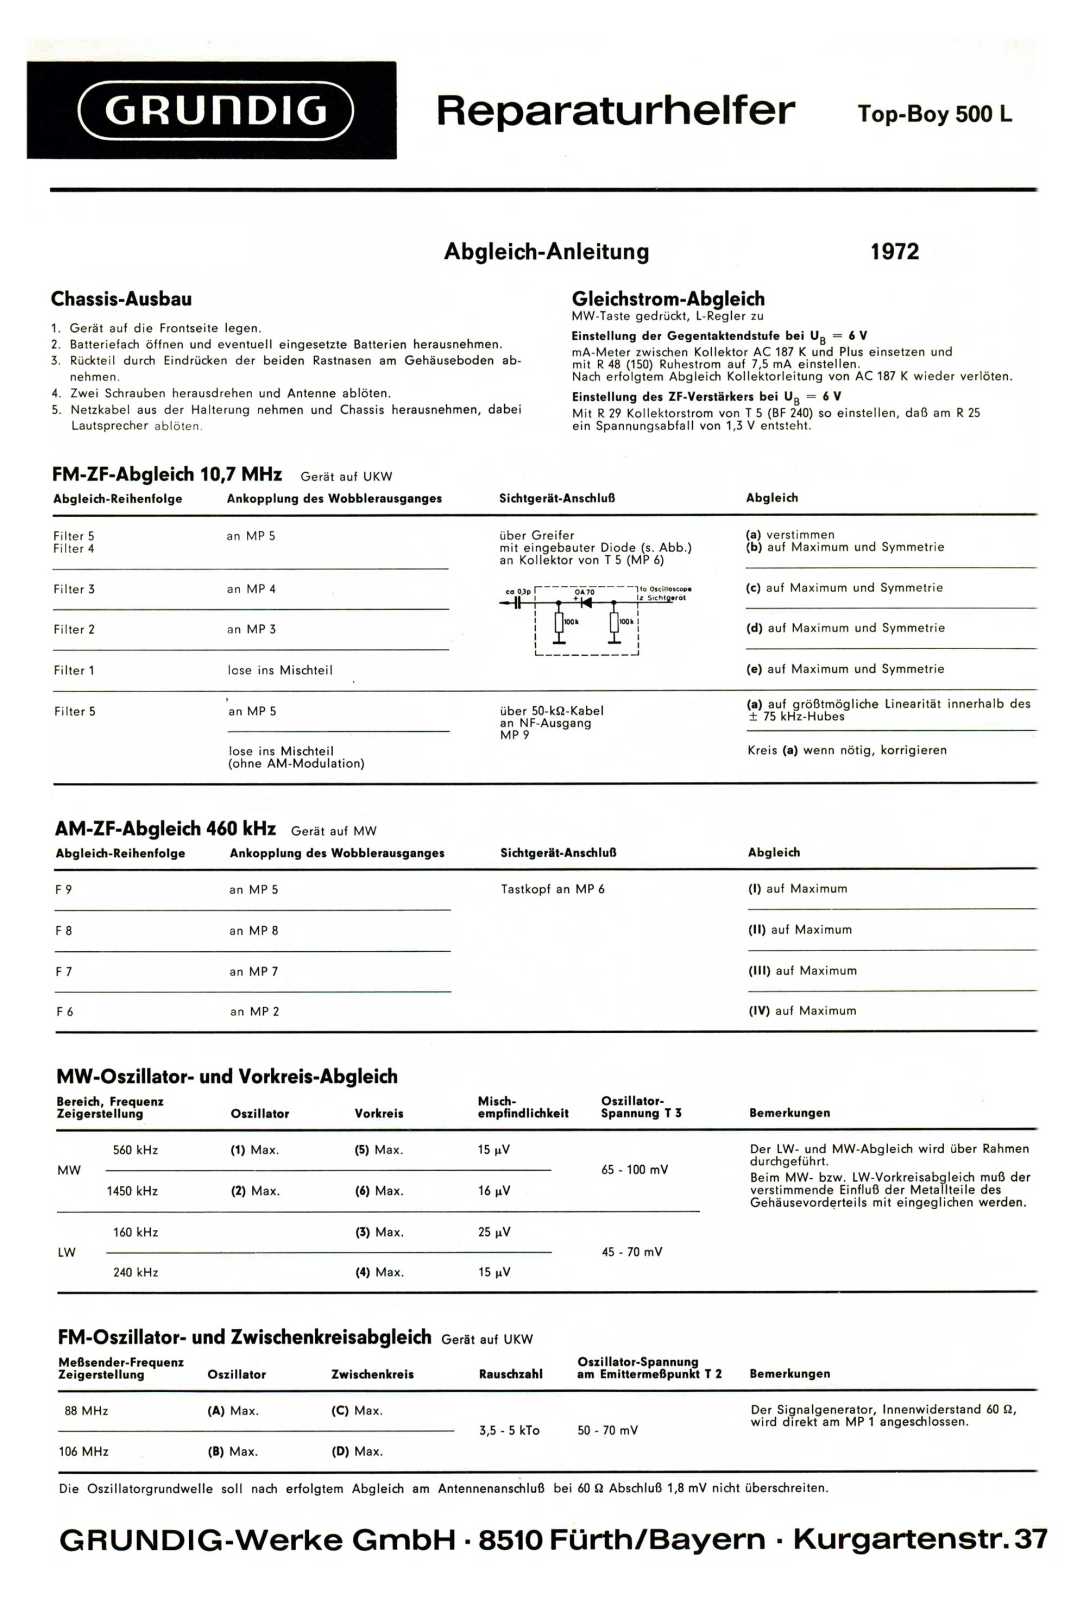 Grundig Top-Boy-500-L Service Manual